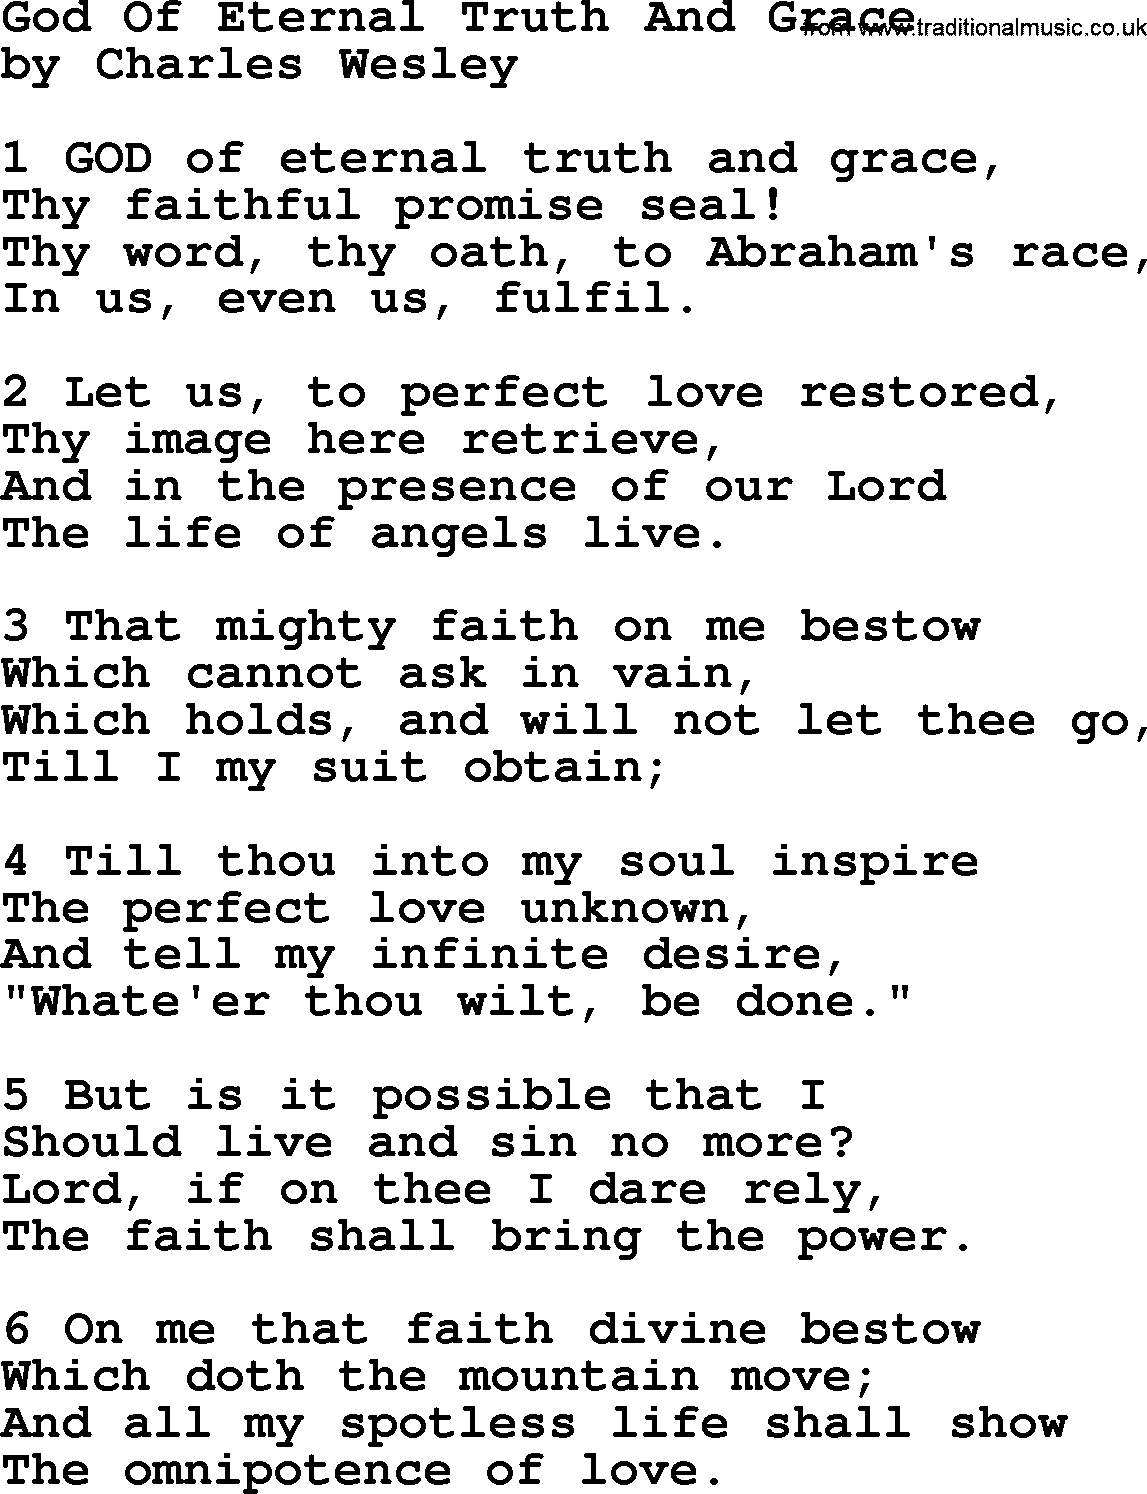 Charles Wesley hymn: God Of Eternal Truth And Grace, lyrics